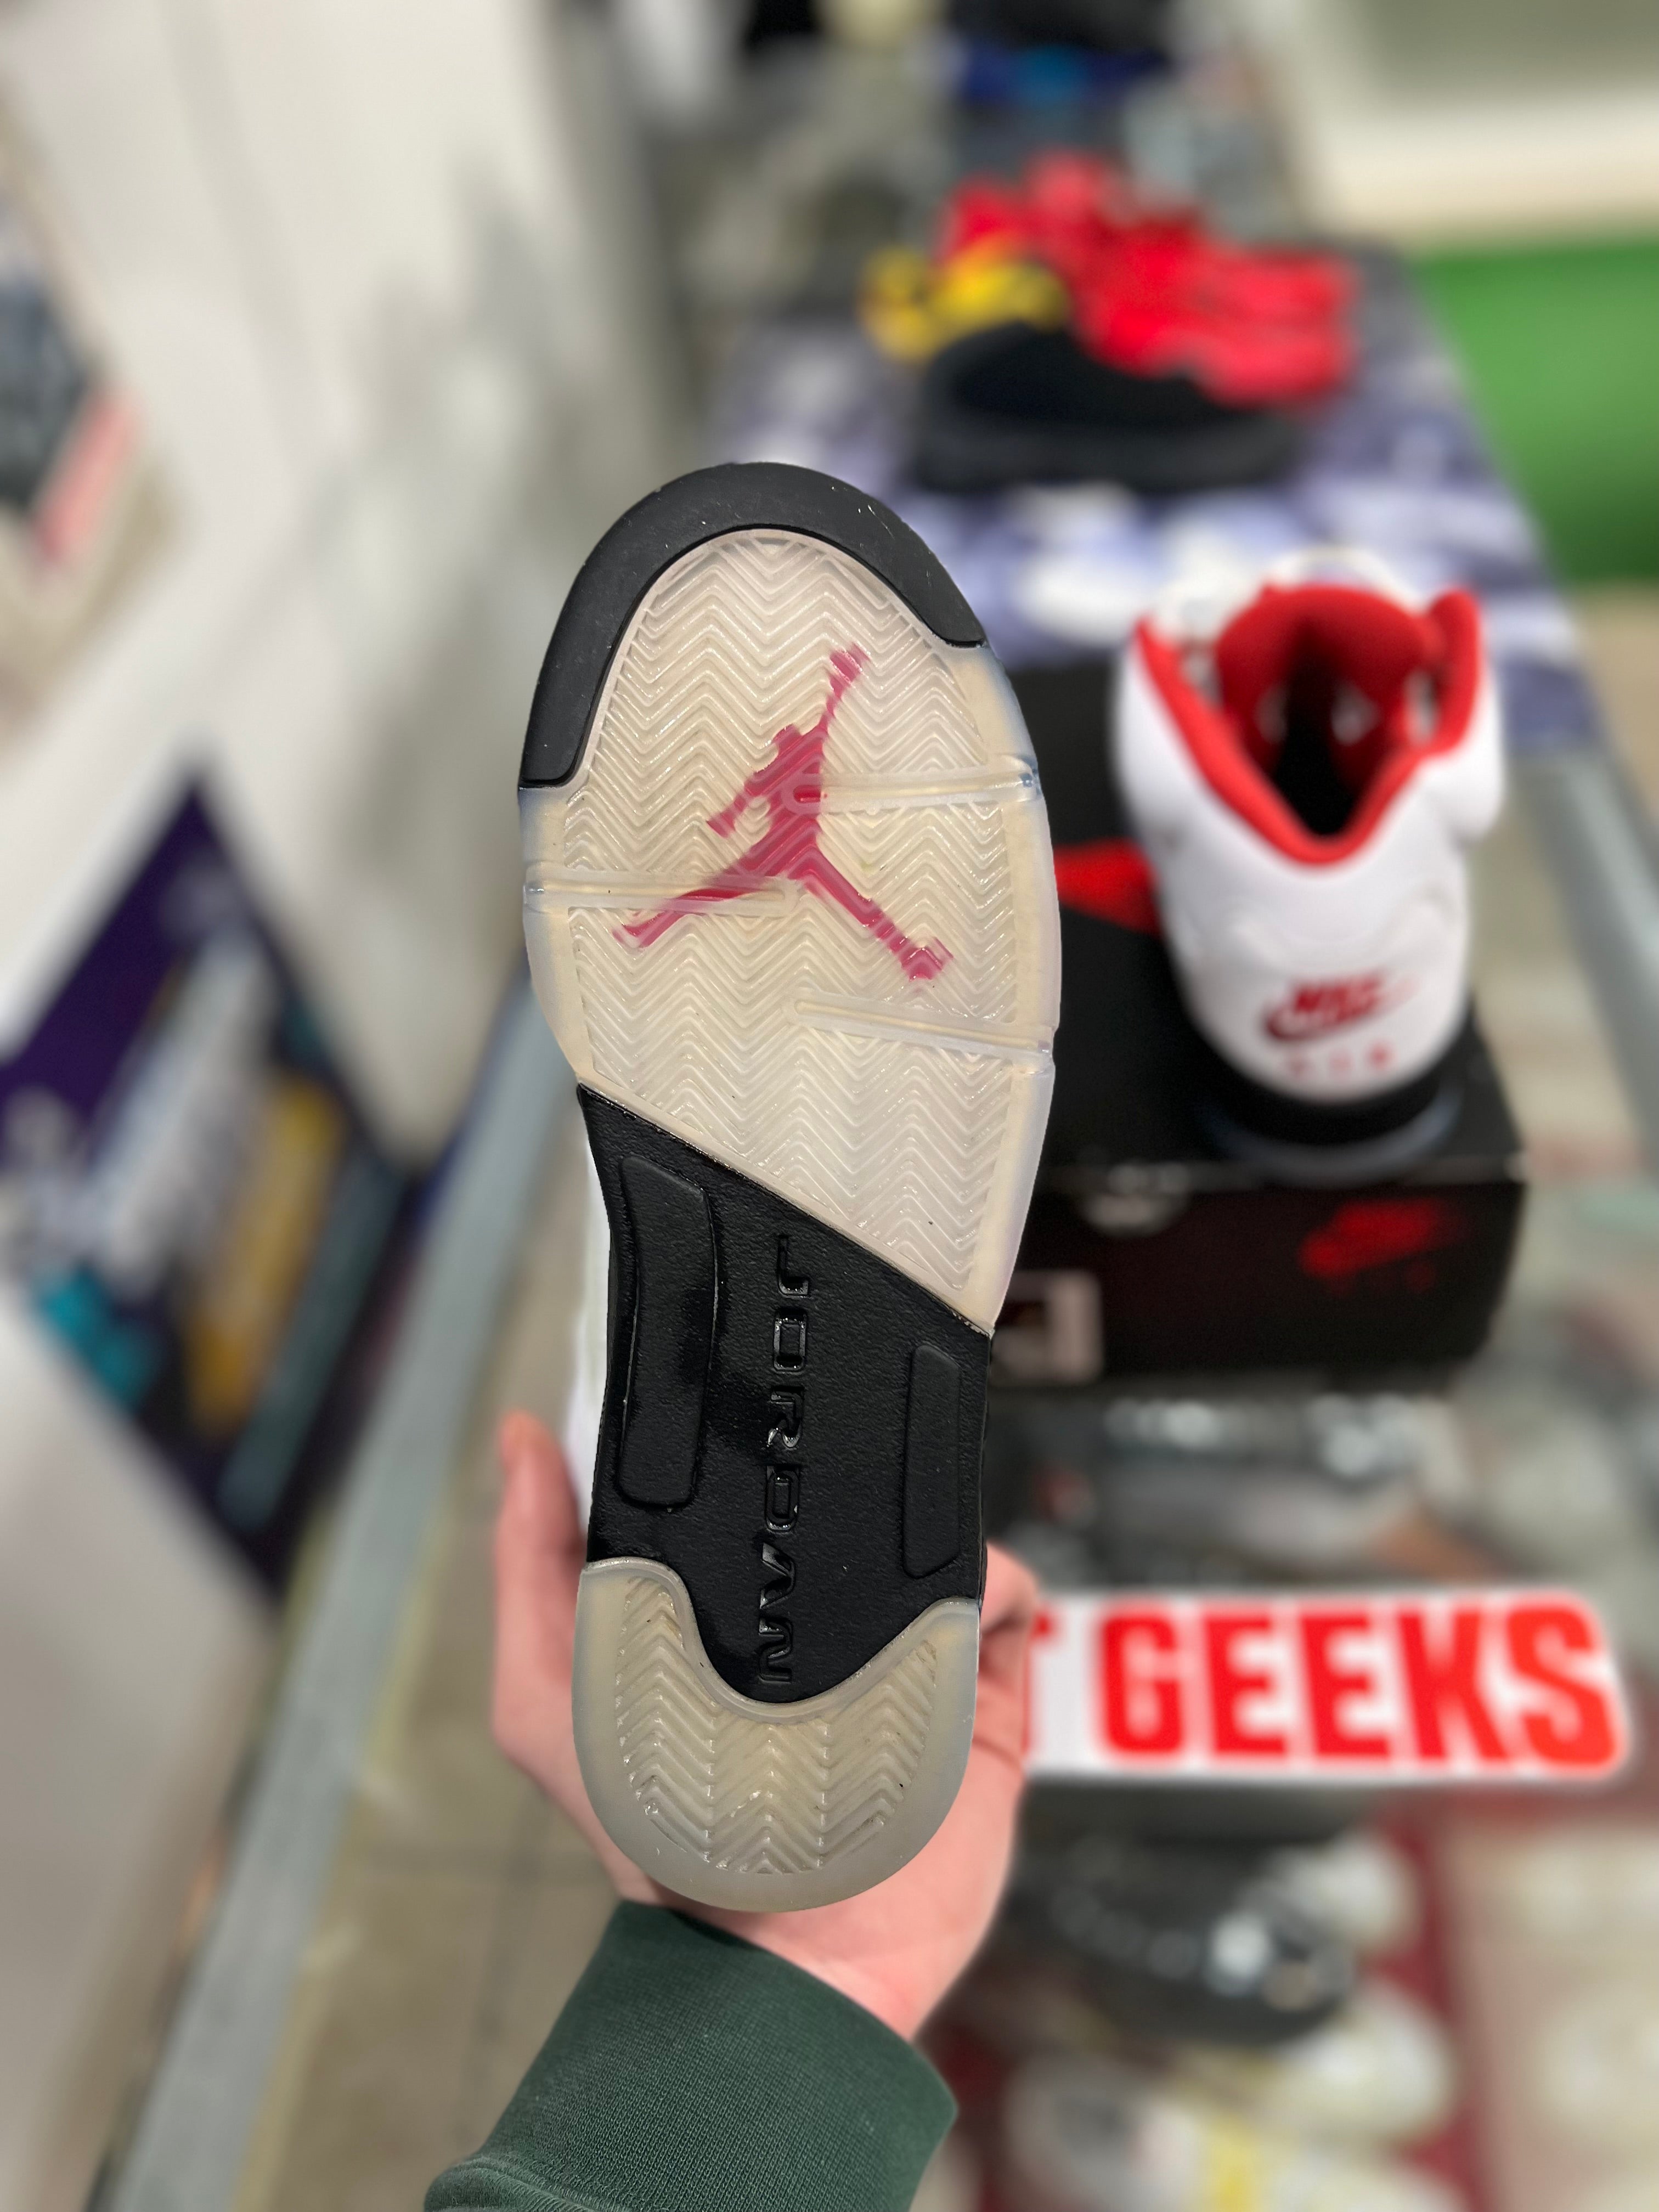 Pre Owned Air Jordan 5 Retro Fire Red Size 6y gs gradeschool shoes